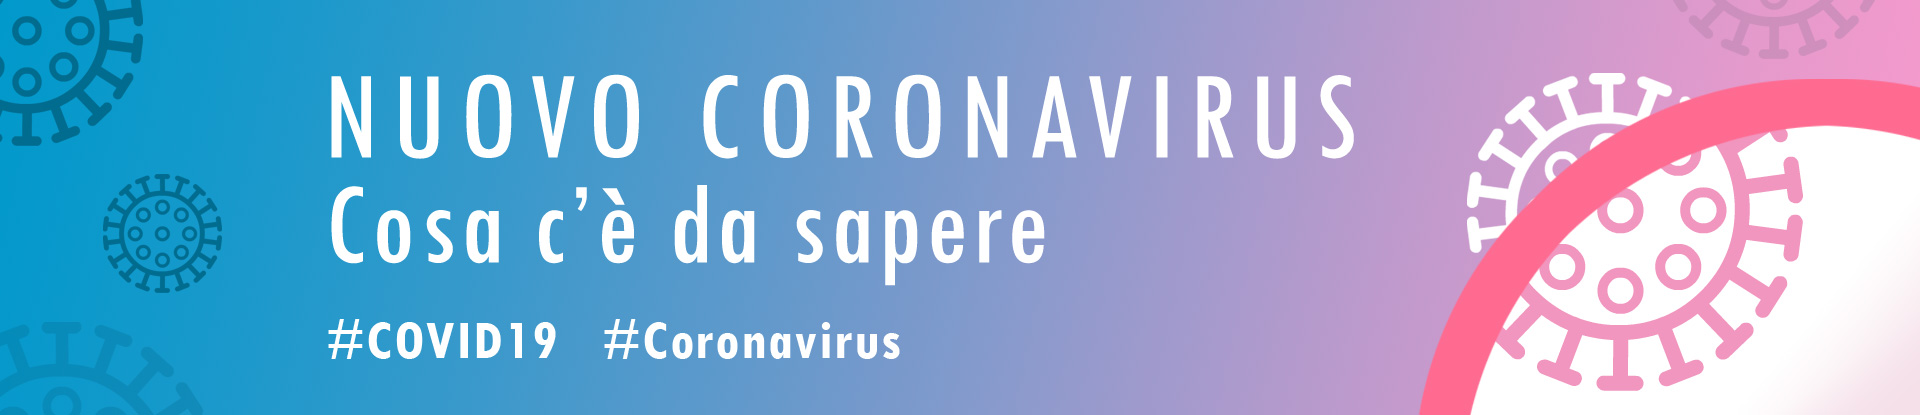 1_banner-image_portale_Coronavirus